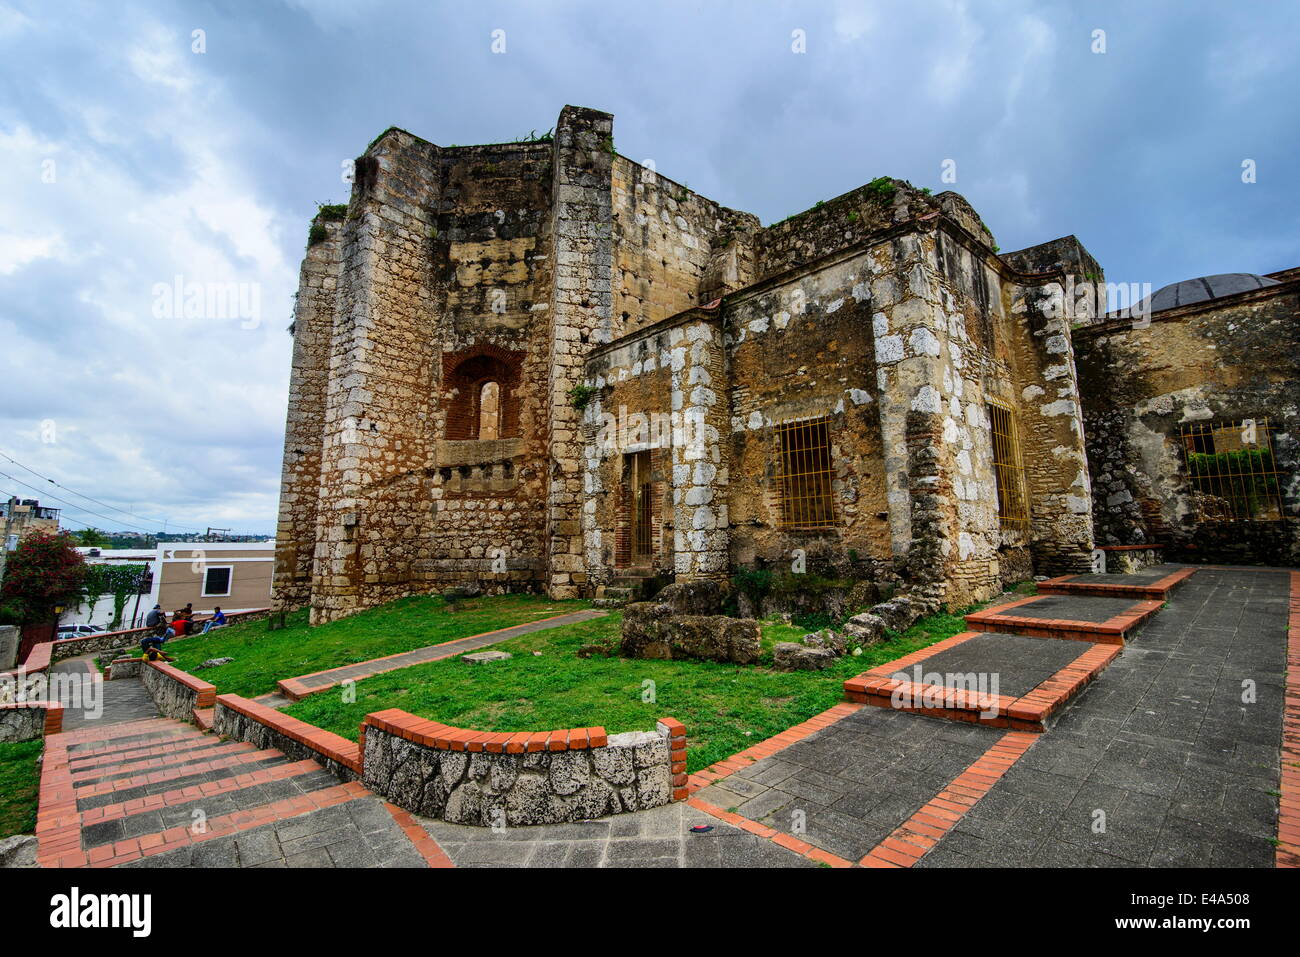 Monasterio de San Francisco, Old Town, UNESCO, Santo Domingo, Dominican Republic, West Indies, Caribbean, Central America Stock Photo